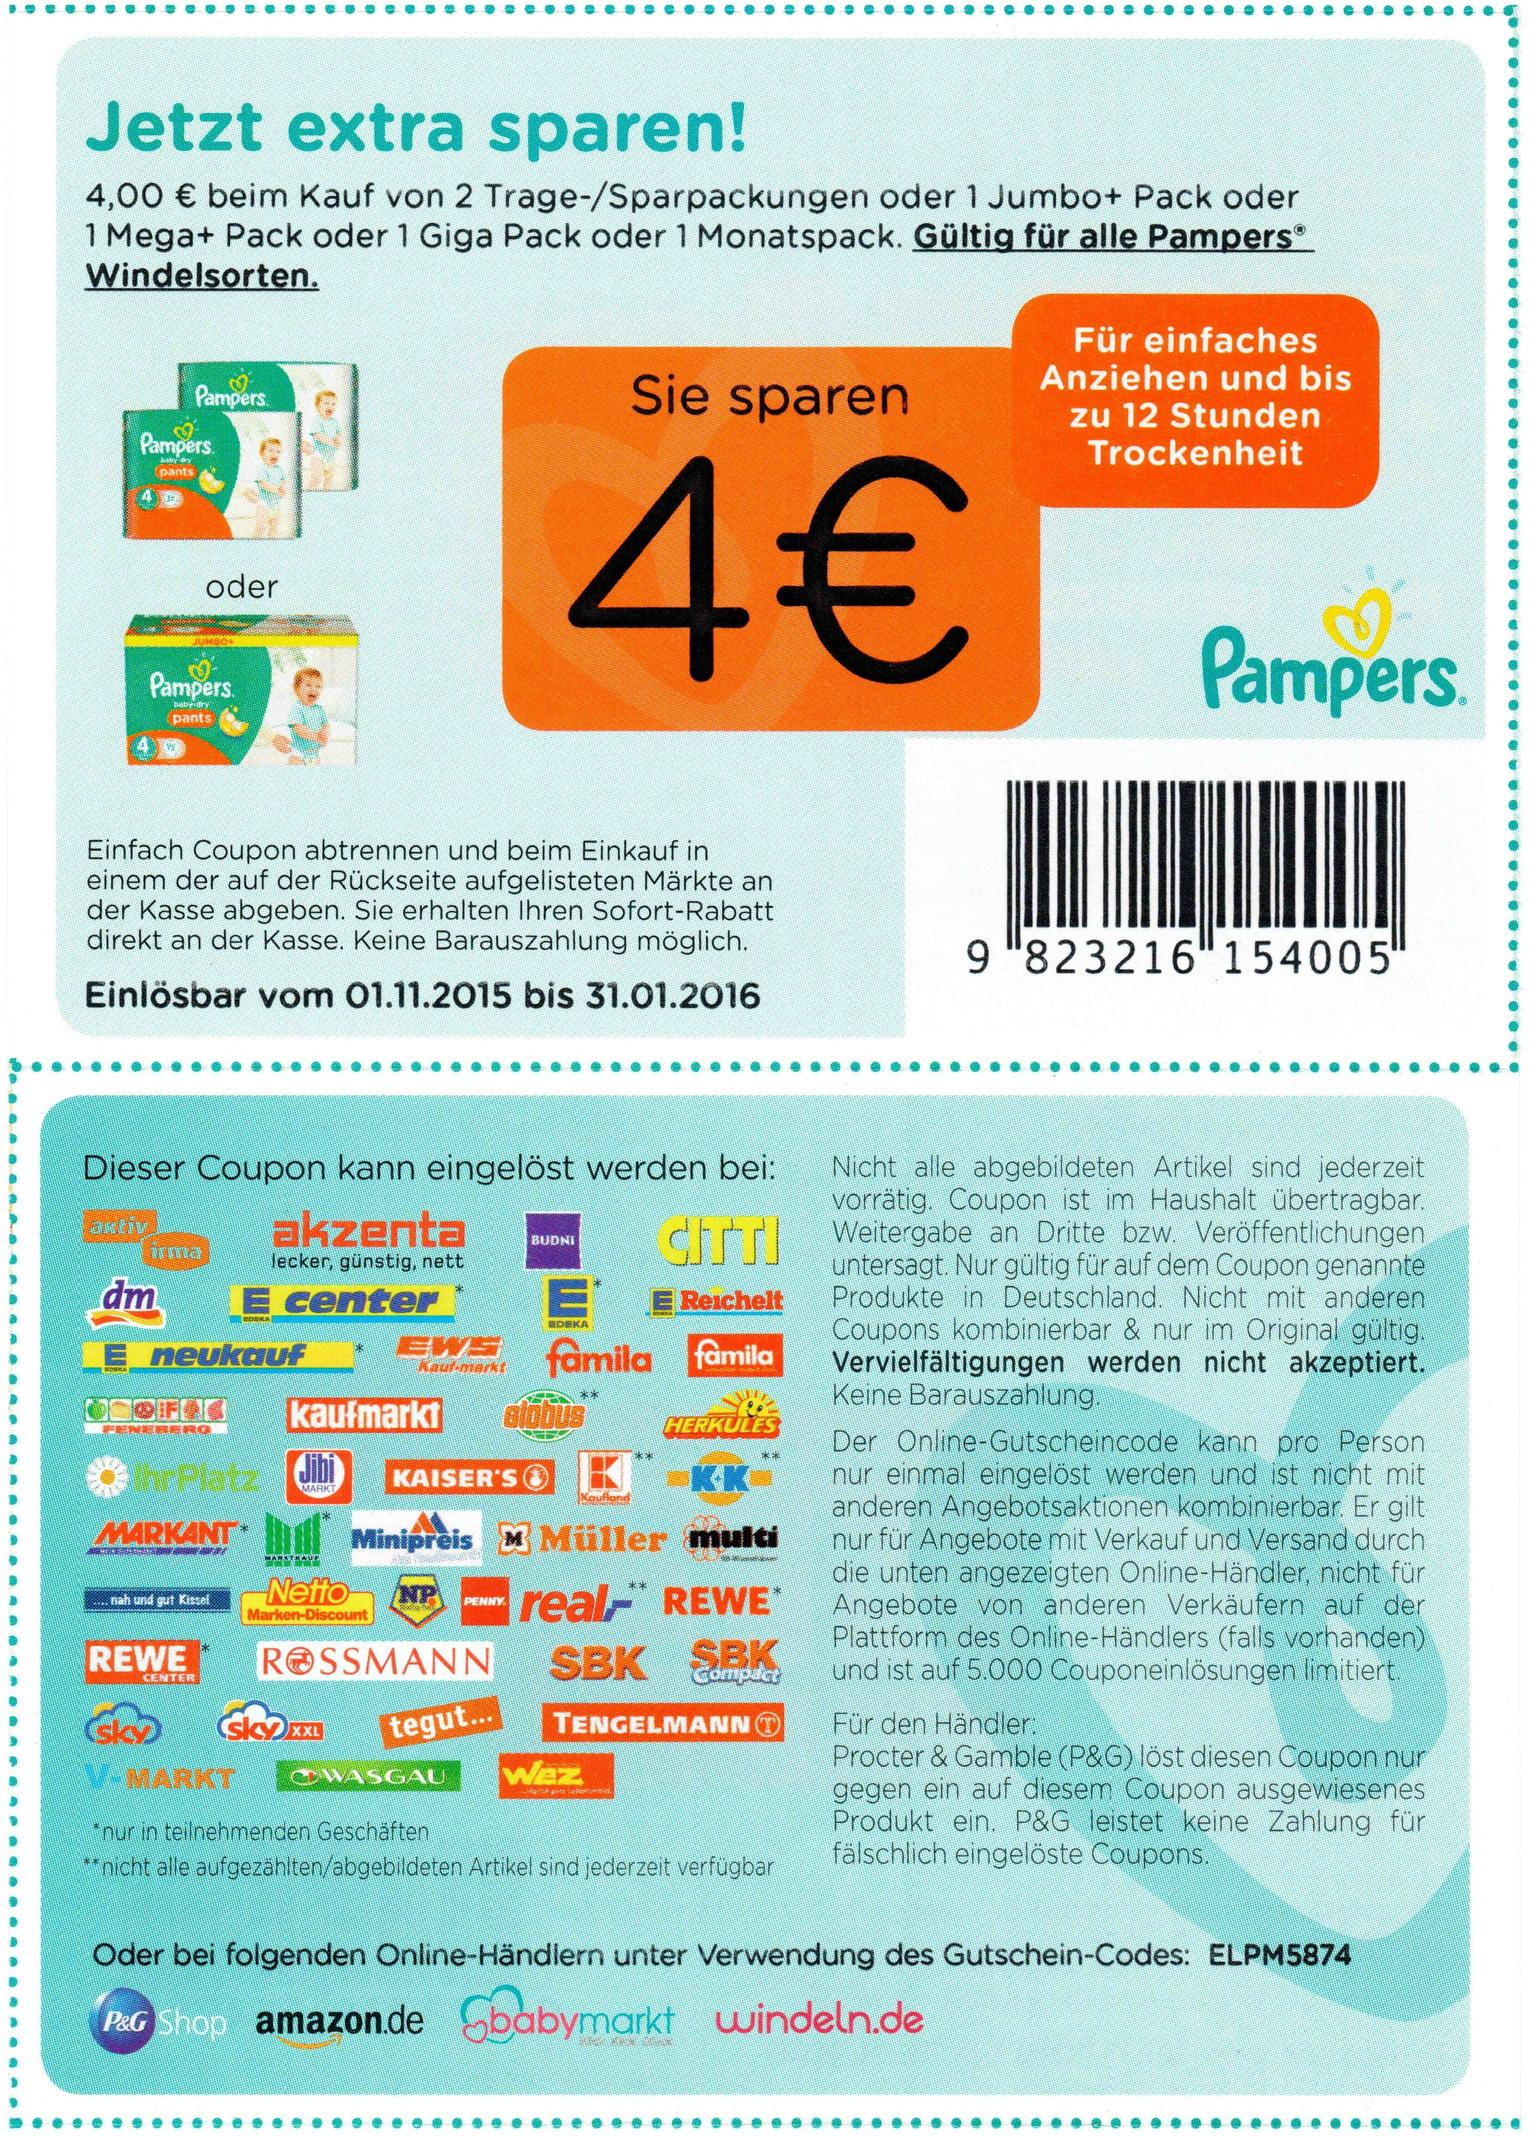 Pampers Coupons Zum Ausdrucken 2018 - Coupons Ob Tampons - Free Printable Spiriva Coupons